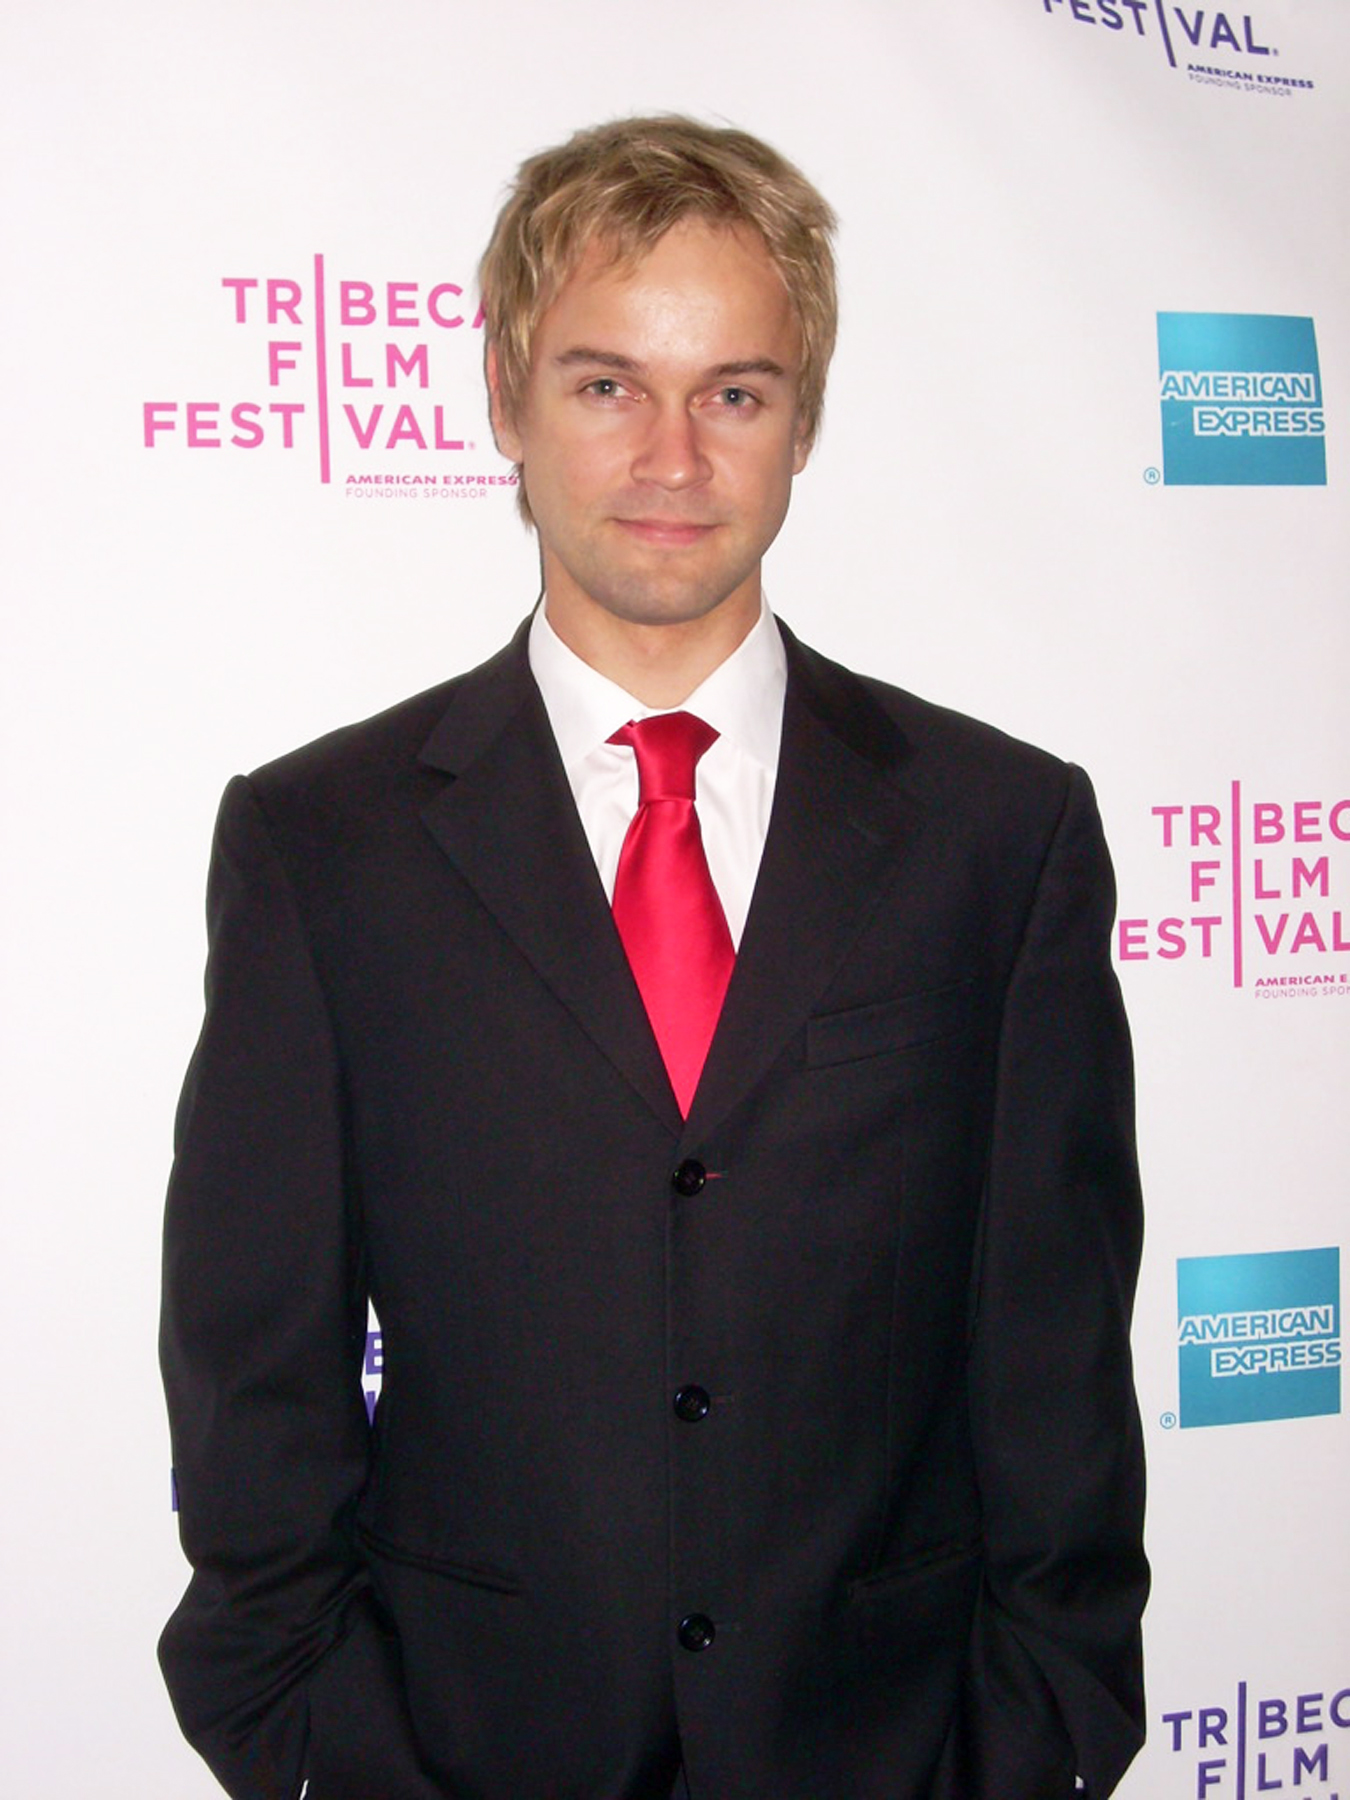 Andrew Lawton - Tribeca Film Festival, New York (2008)